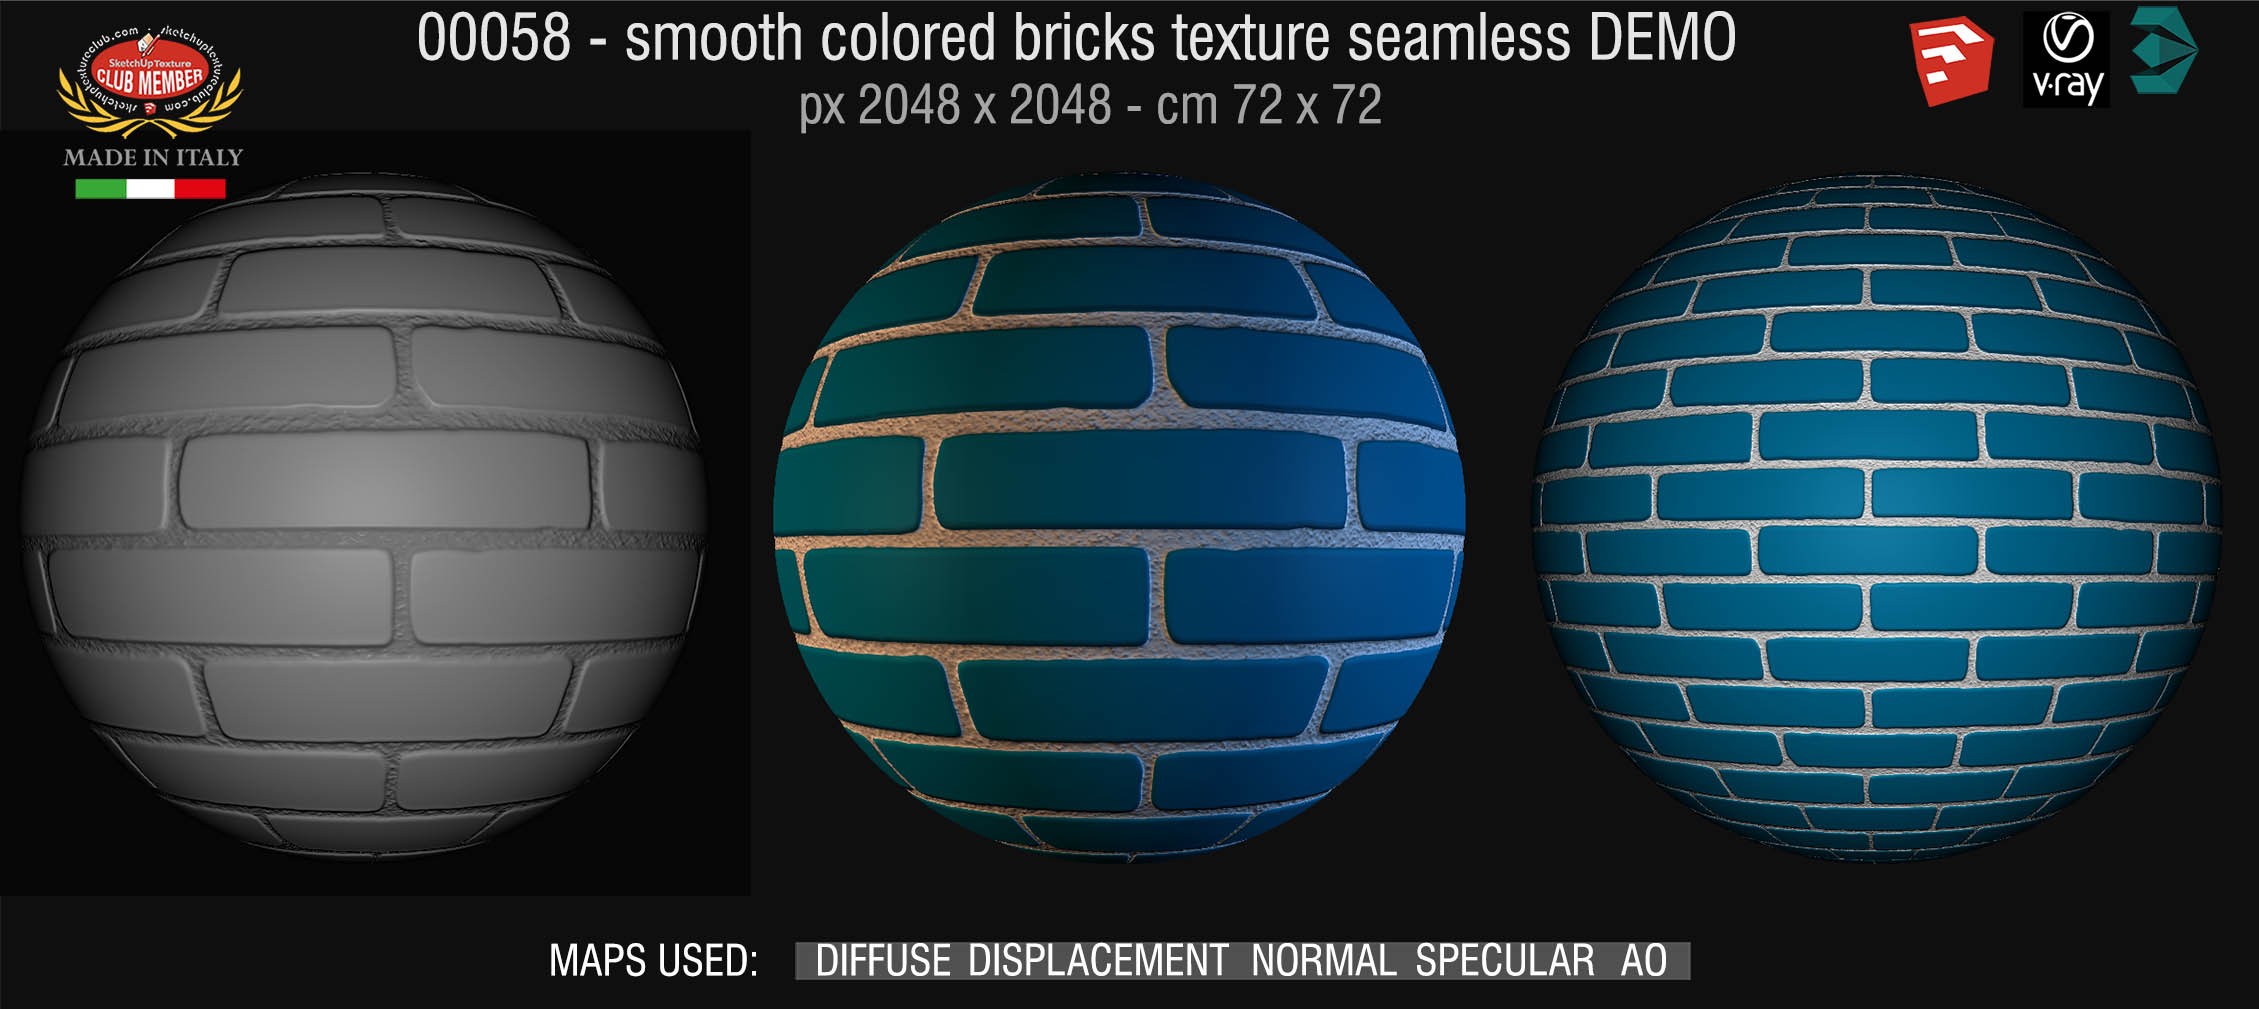 00058 smooth colored bricks texture seamless + maps DEMO